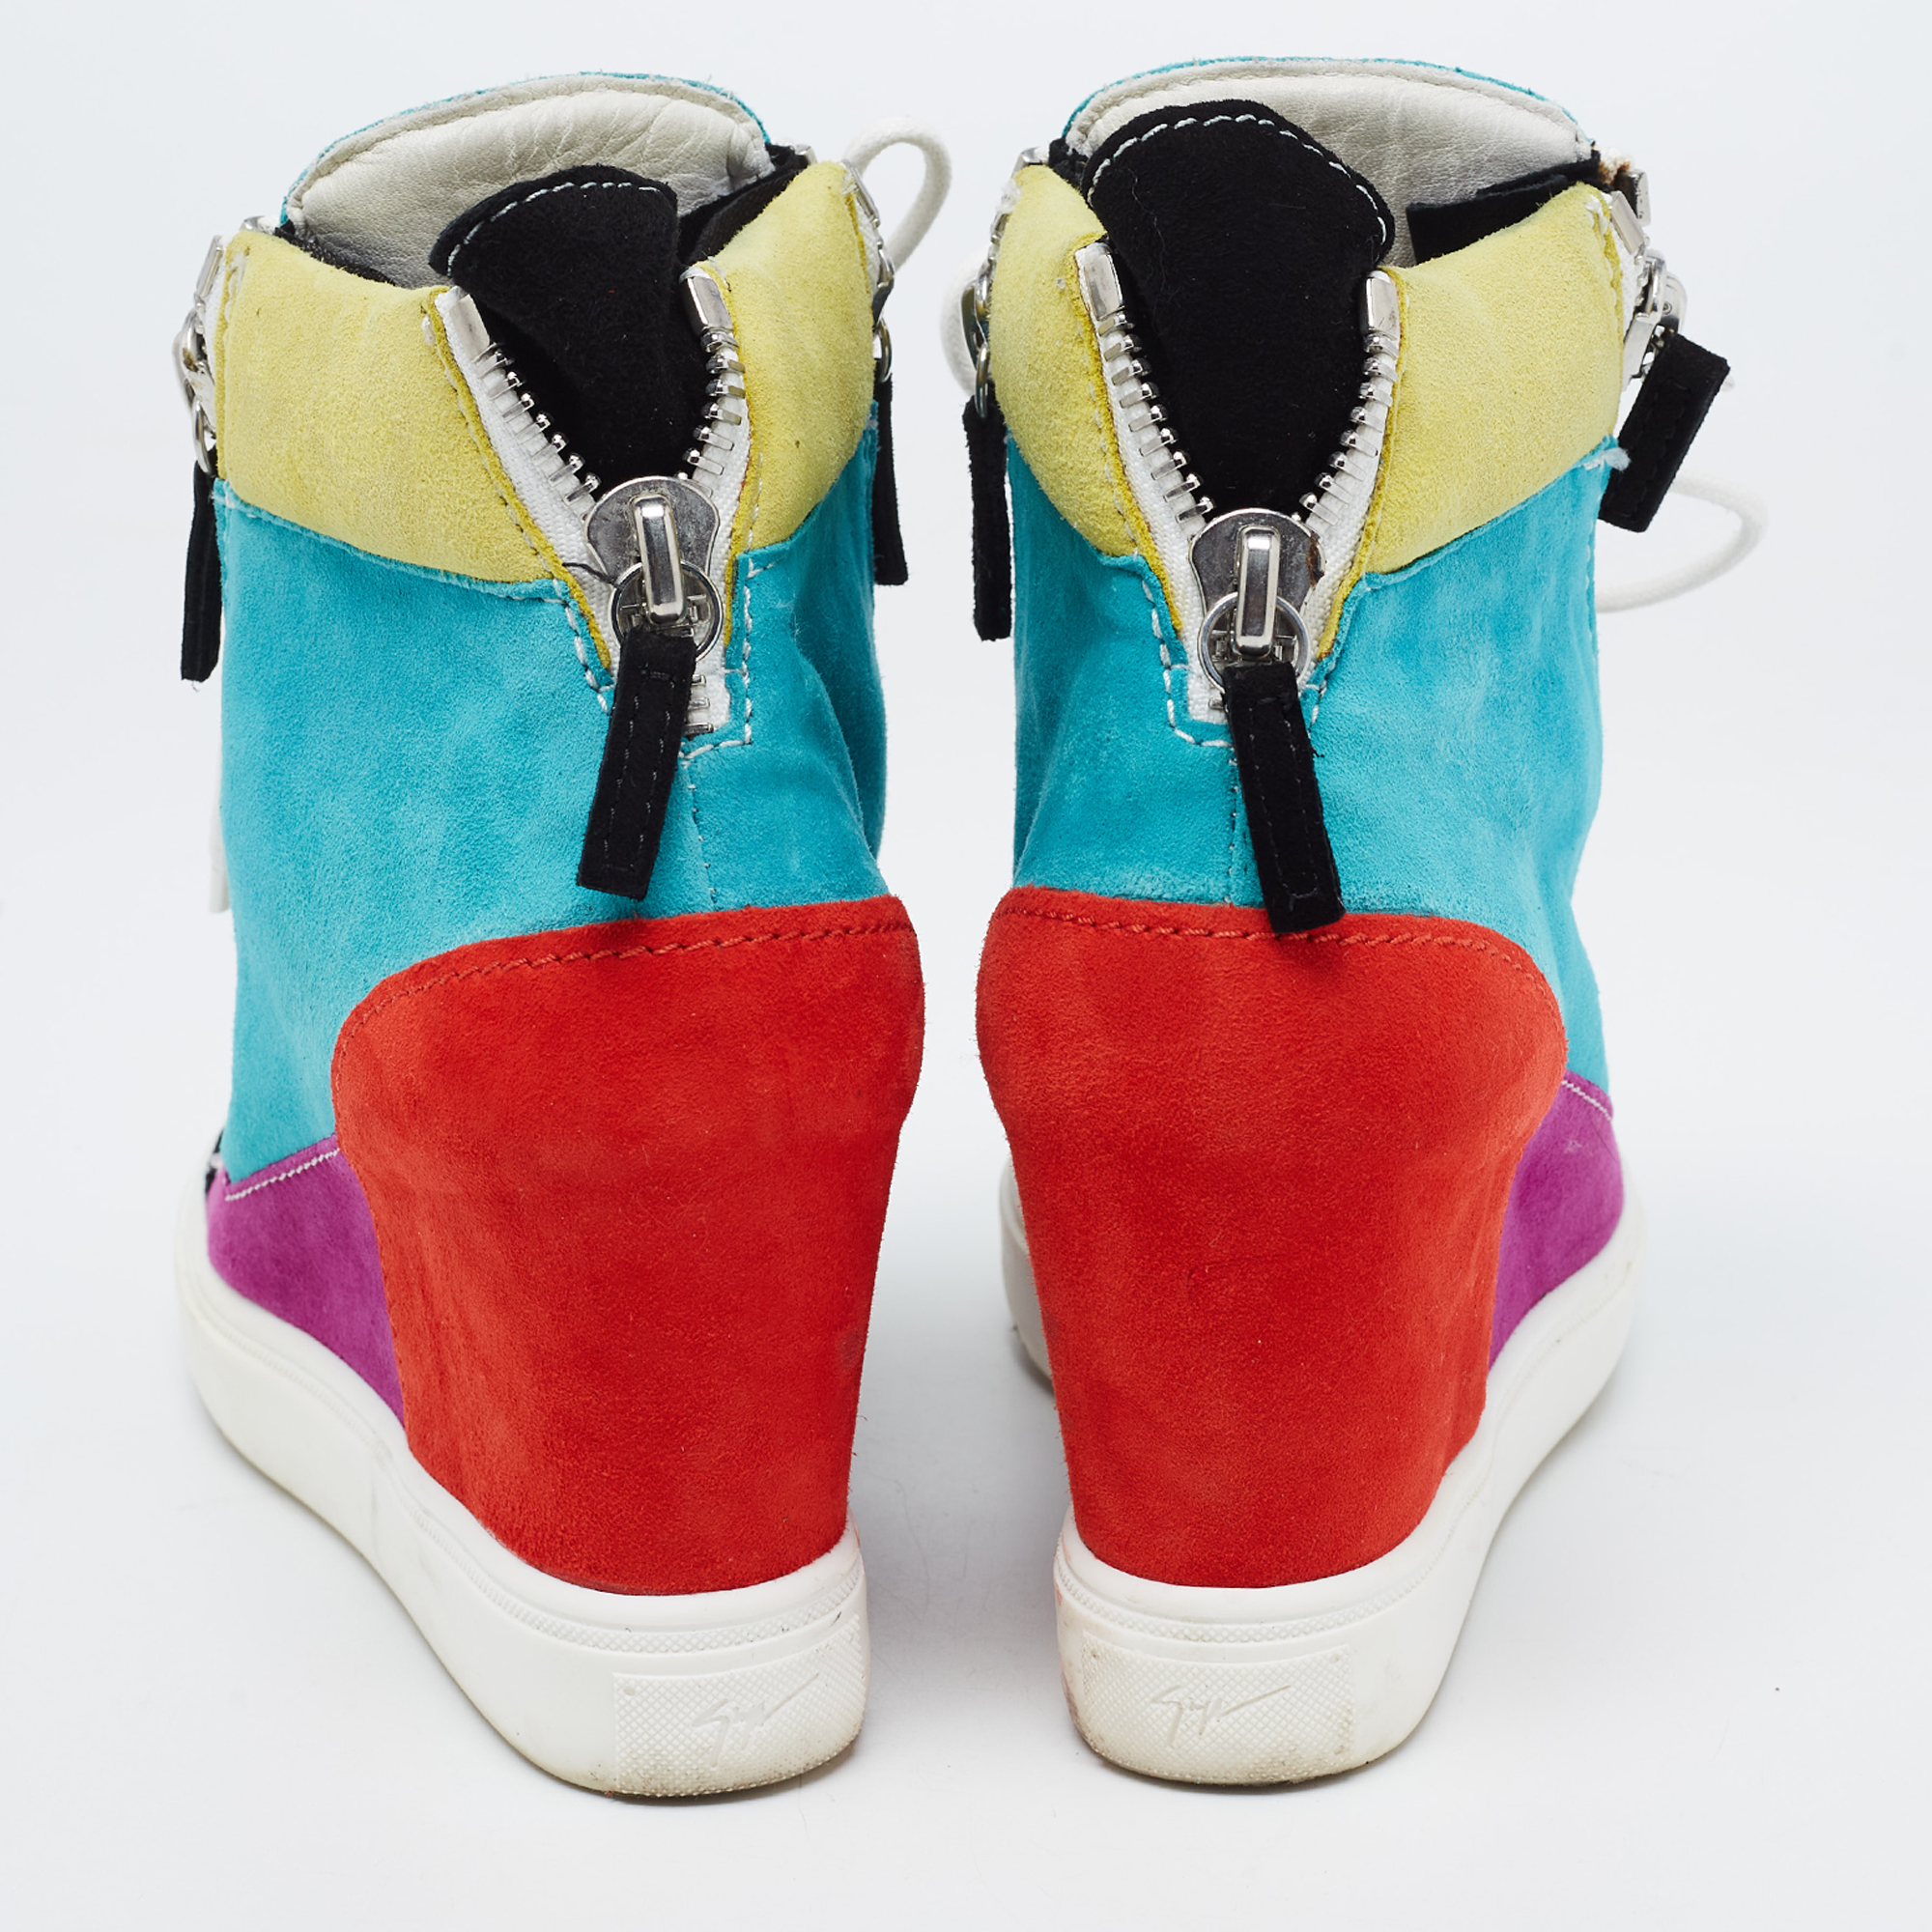 Giuseppe Zanotti Multicolor Suede High Top Sneakers Size 35